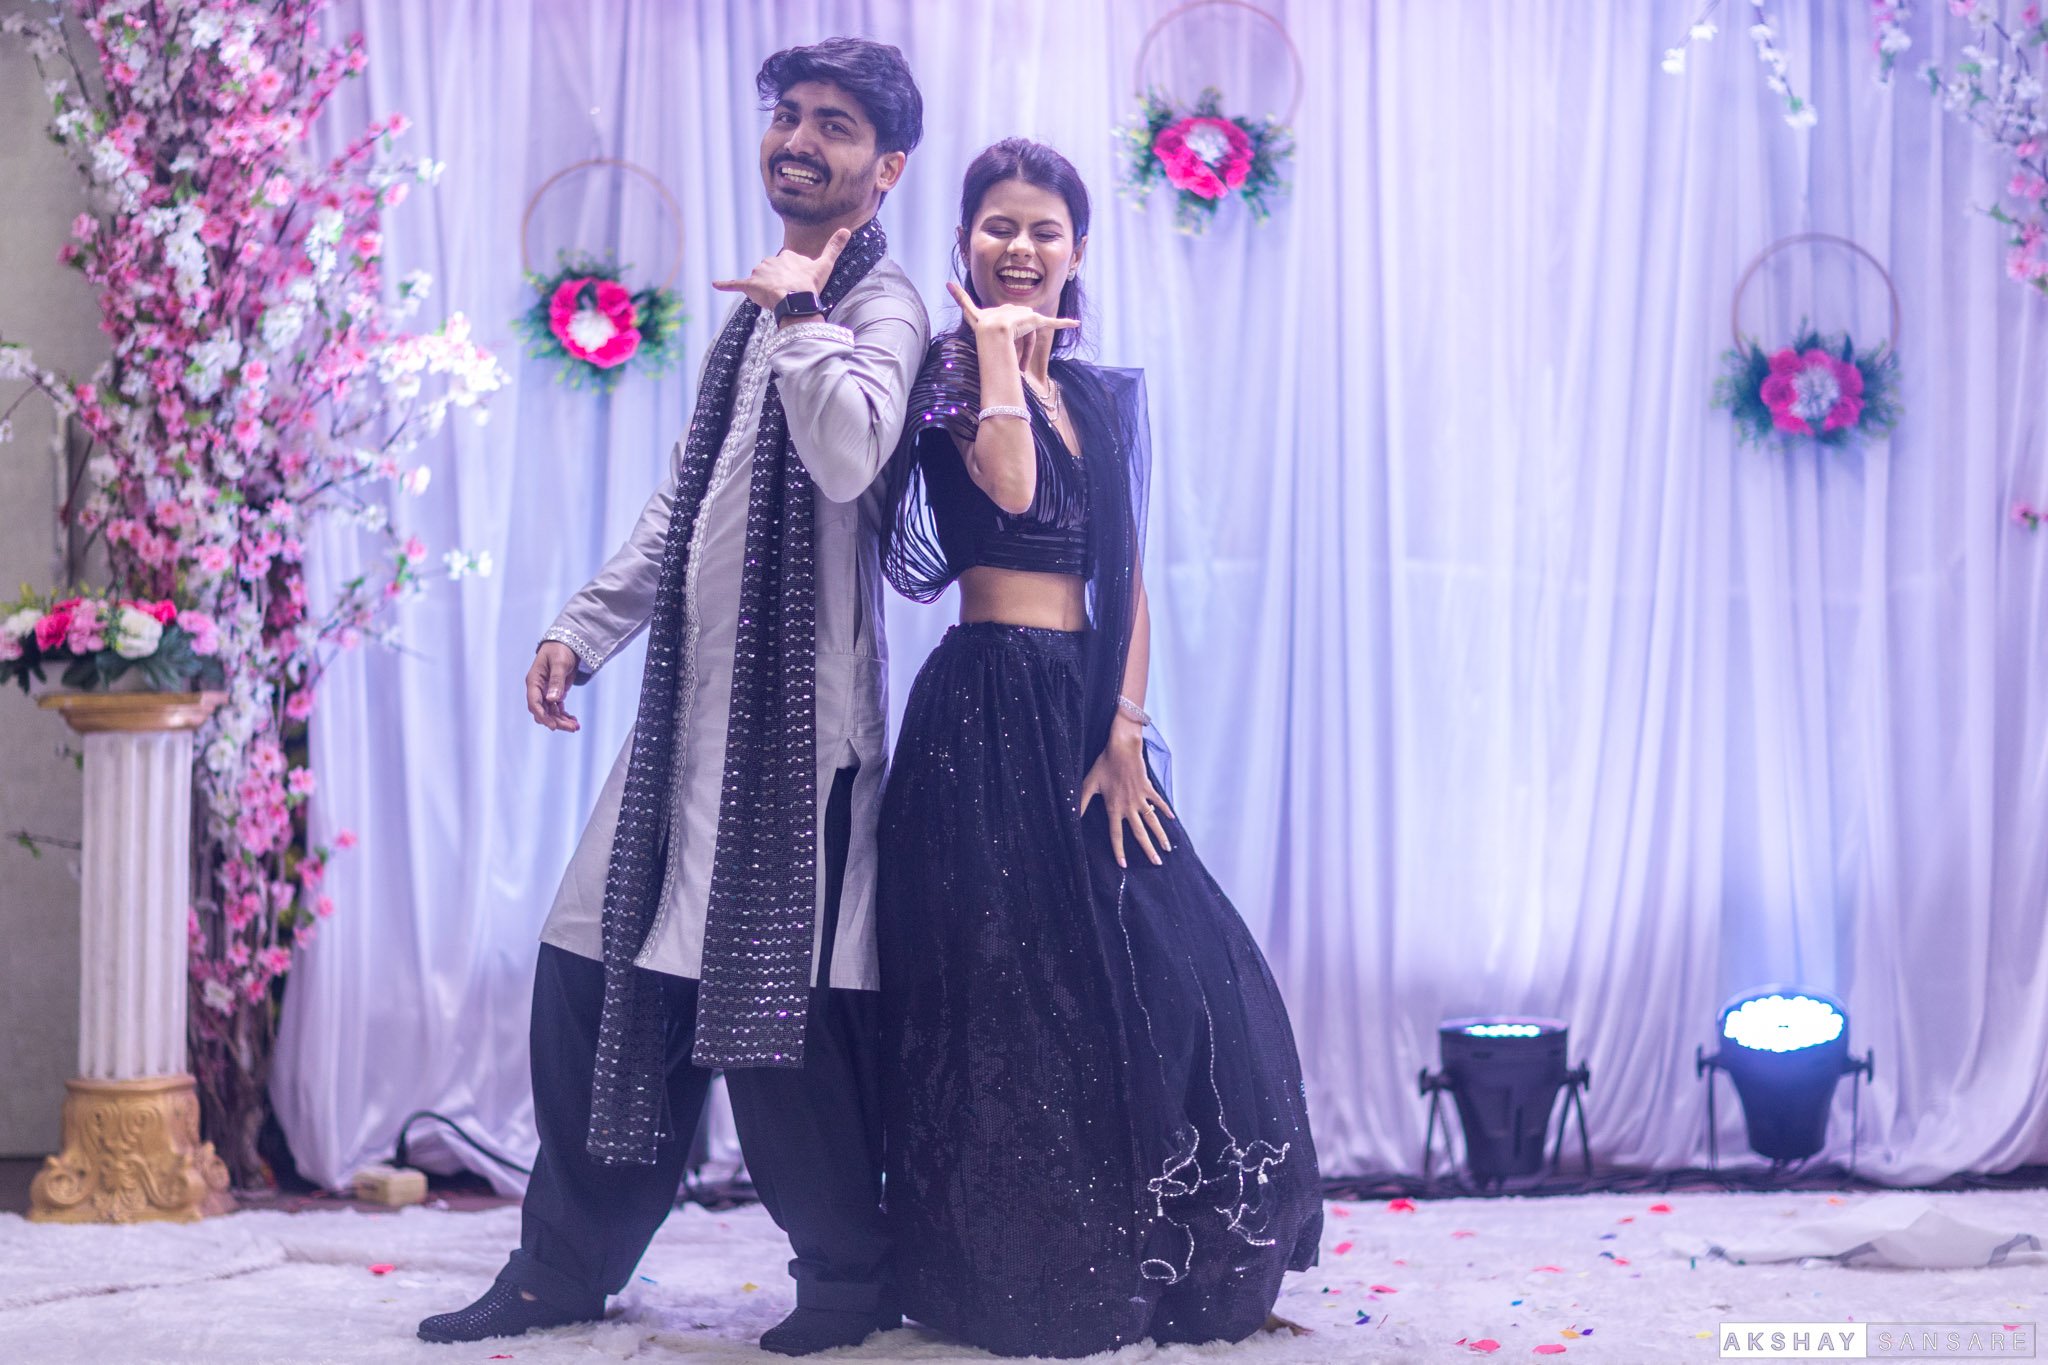 Dakshay x Basuri wedding c | Akshay Sansare Photography -6.jpg